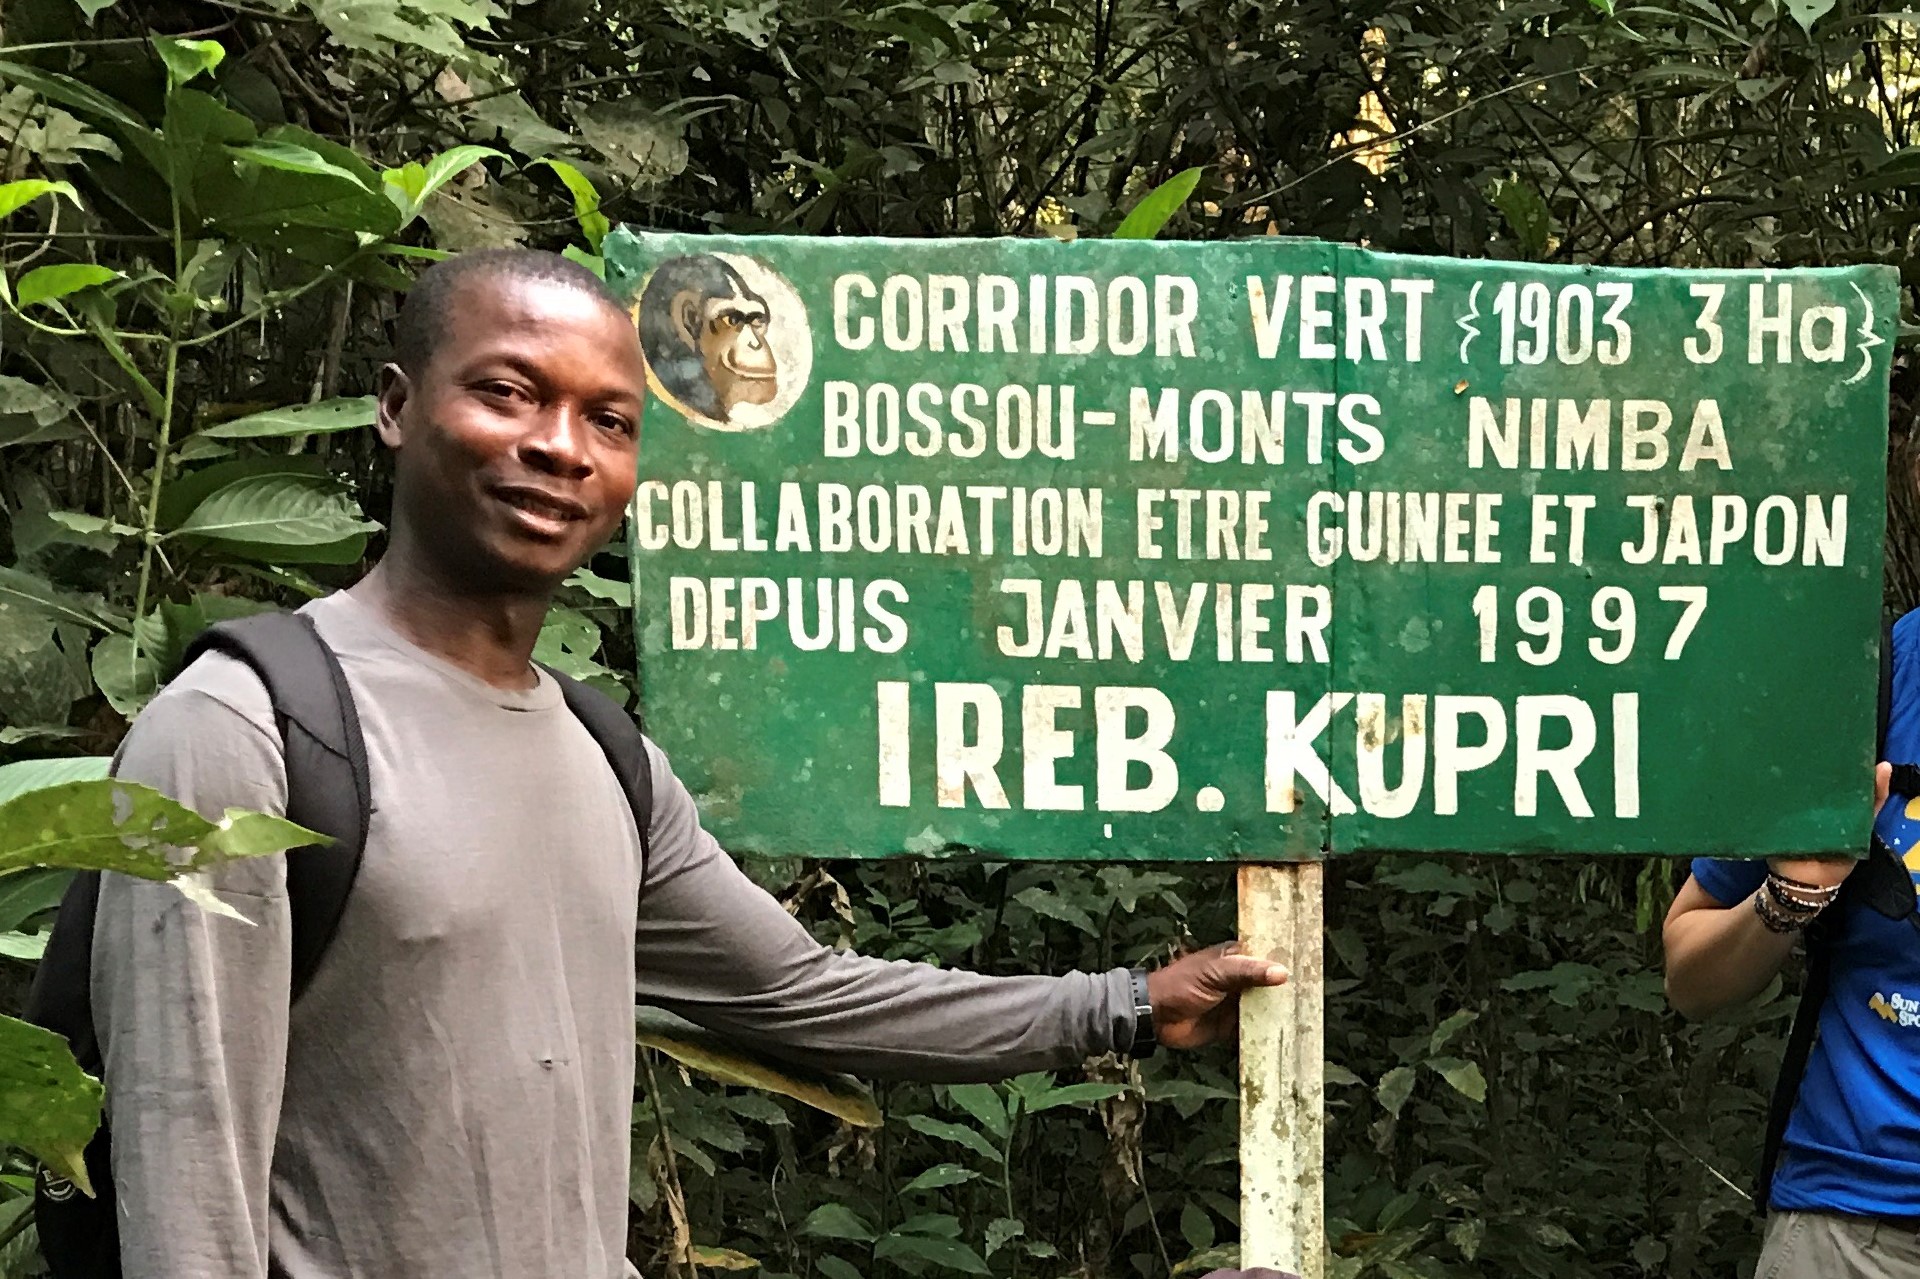 Bossou field assistant Henry Camara stood in front of a green sign that reads "CORRIDOR VERT {1903 3 Ha} BOSSOU-MONTS NIMBA COLLABORATION ETRE GUINEE ET JAPON DEPUIS JANVIER 1997 IREB. KUPRI"